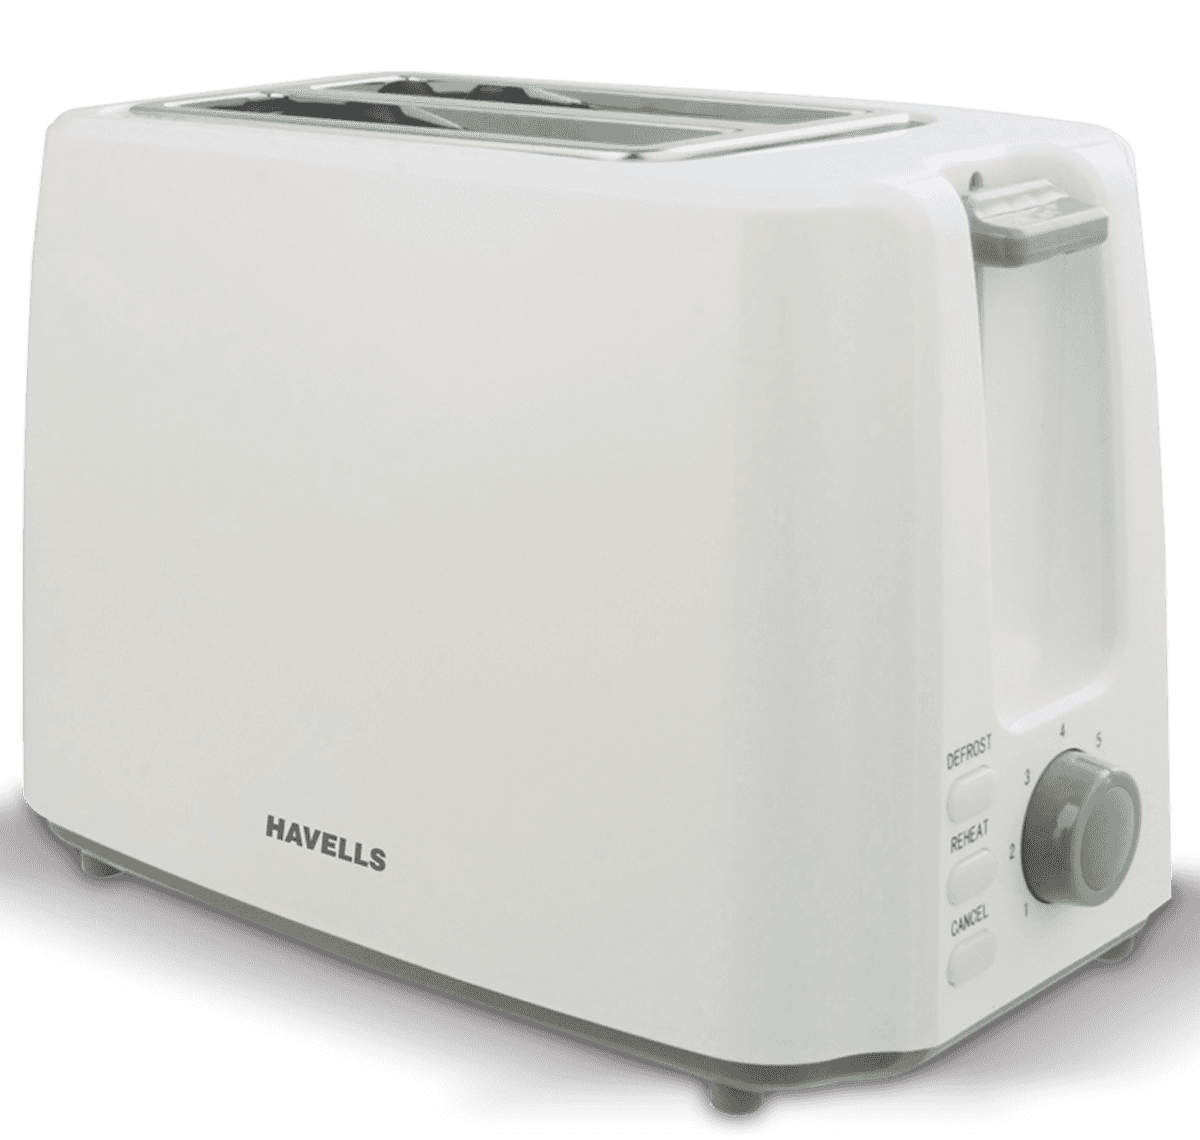 Pop up toaster (CRISP PLUS 2 SLICE WHITE)